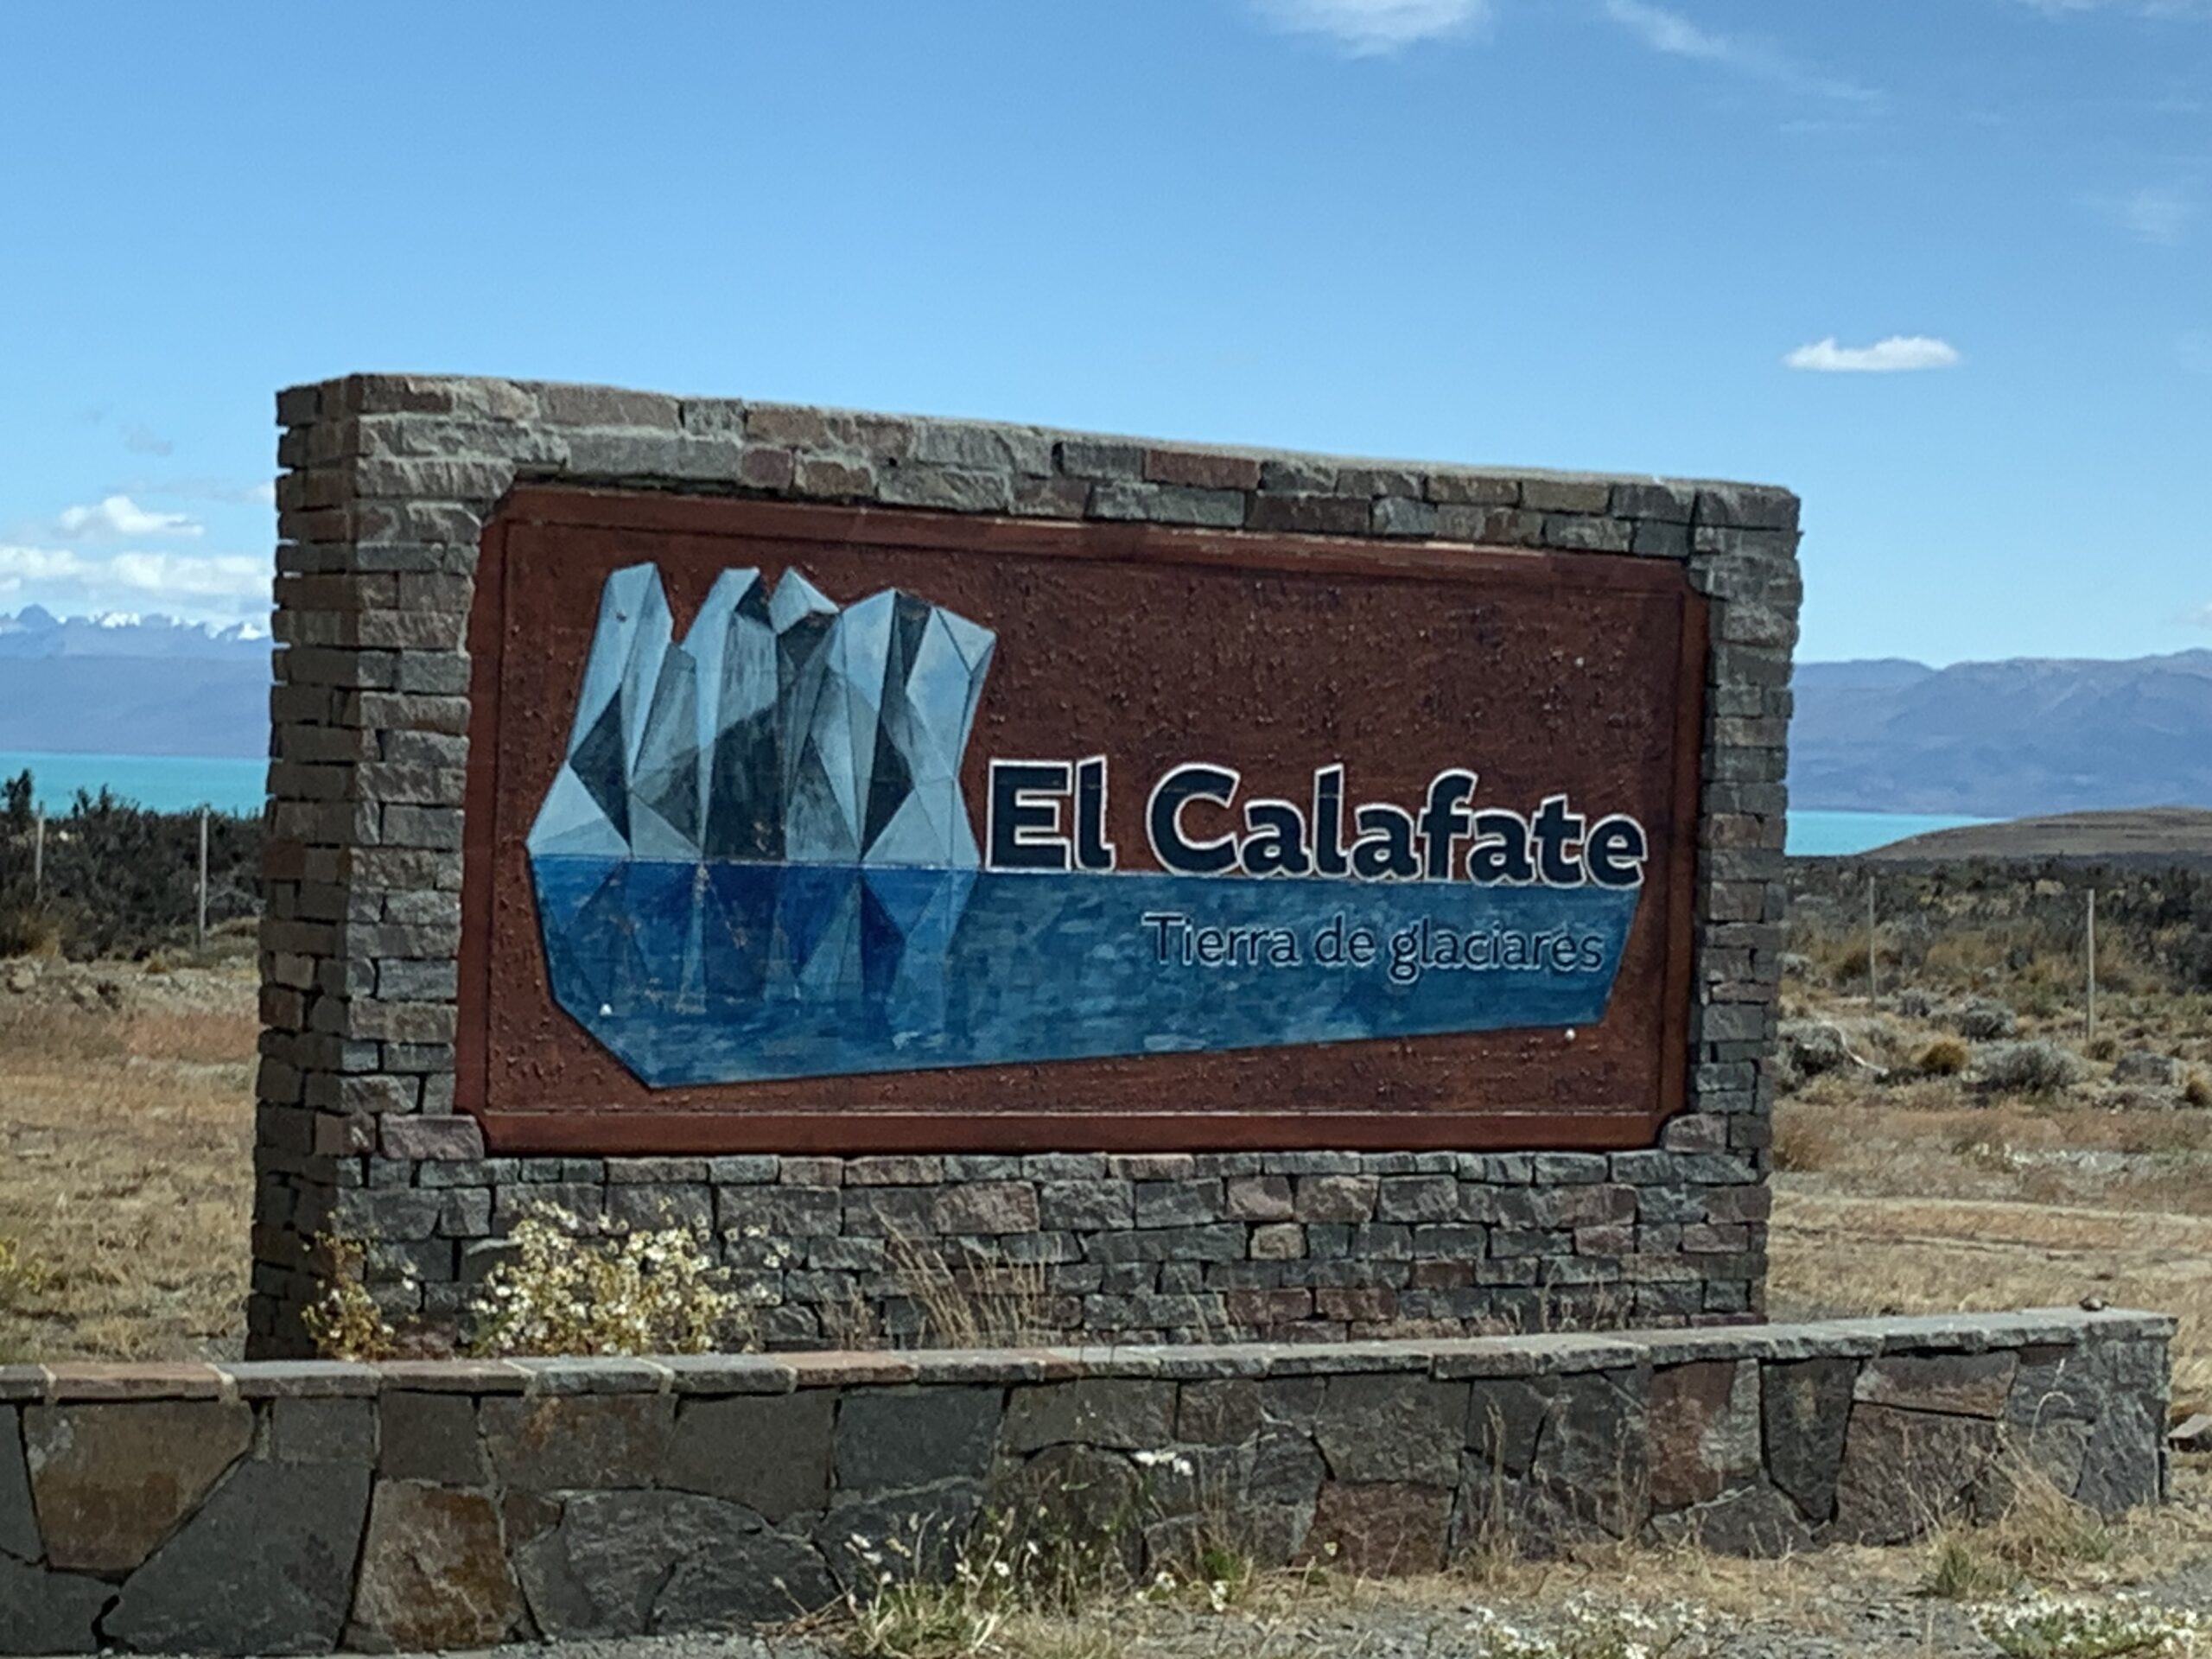 El Calafate, Patagonia, Argentina